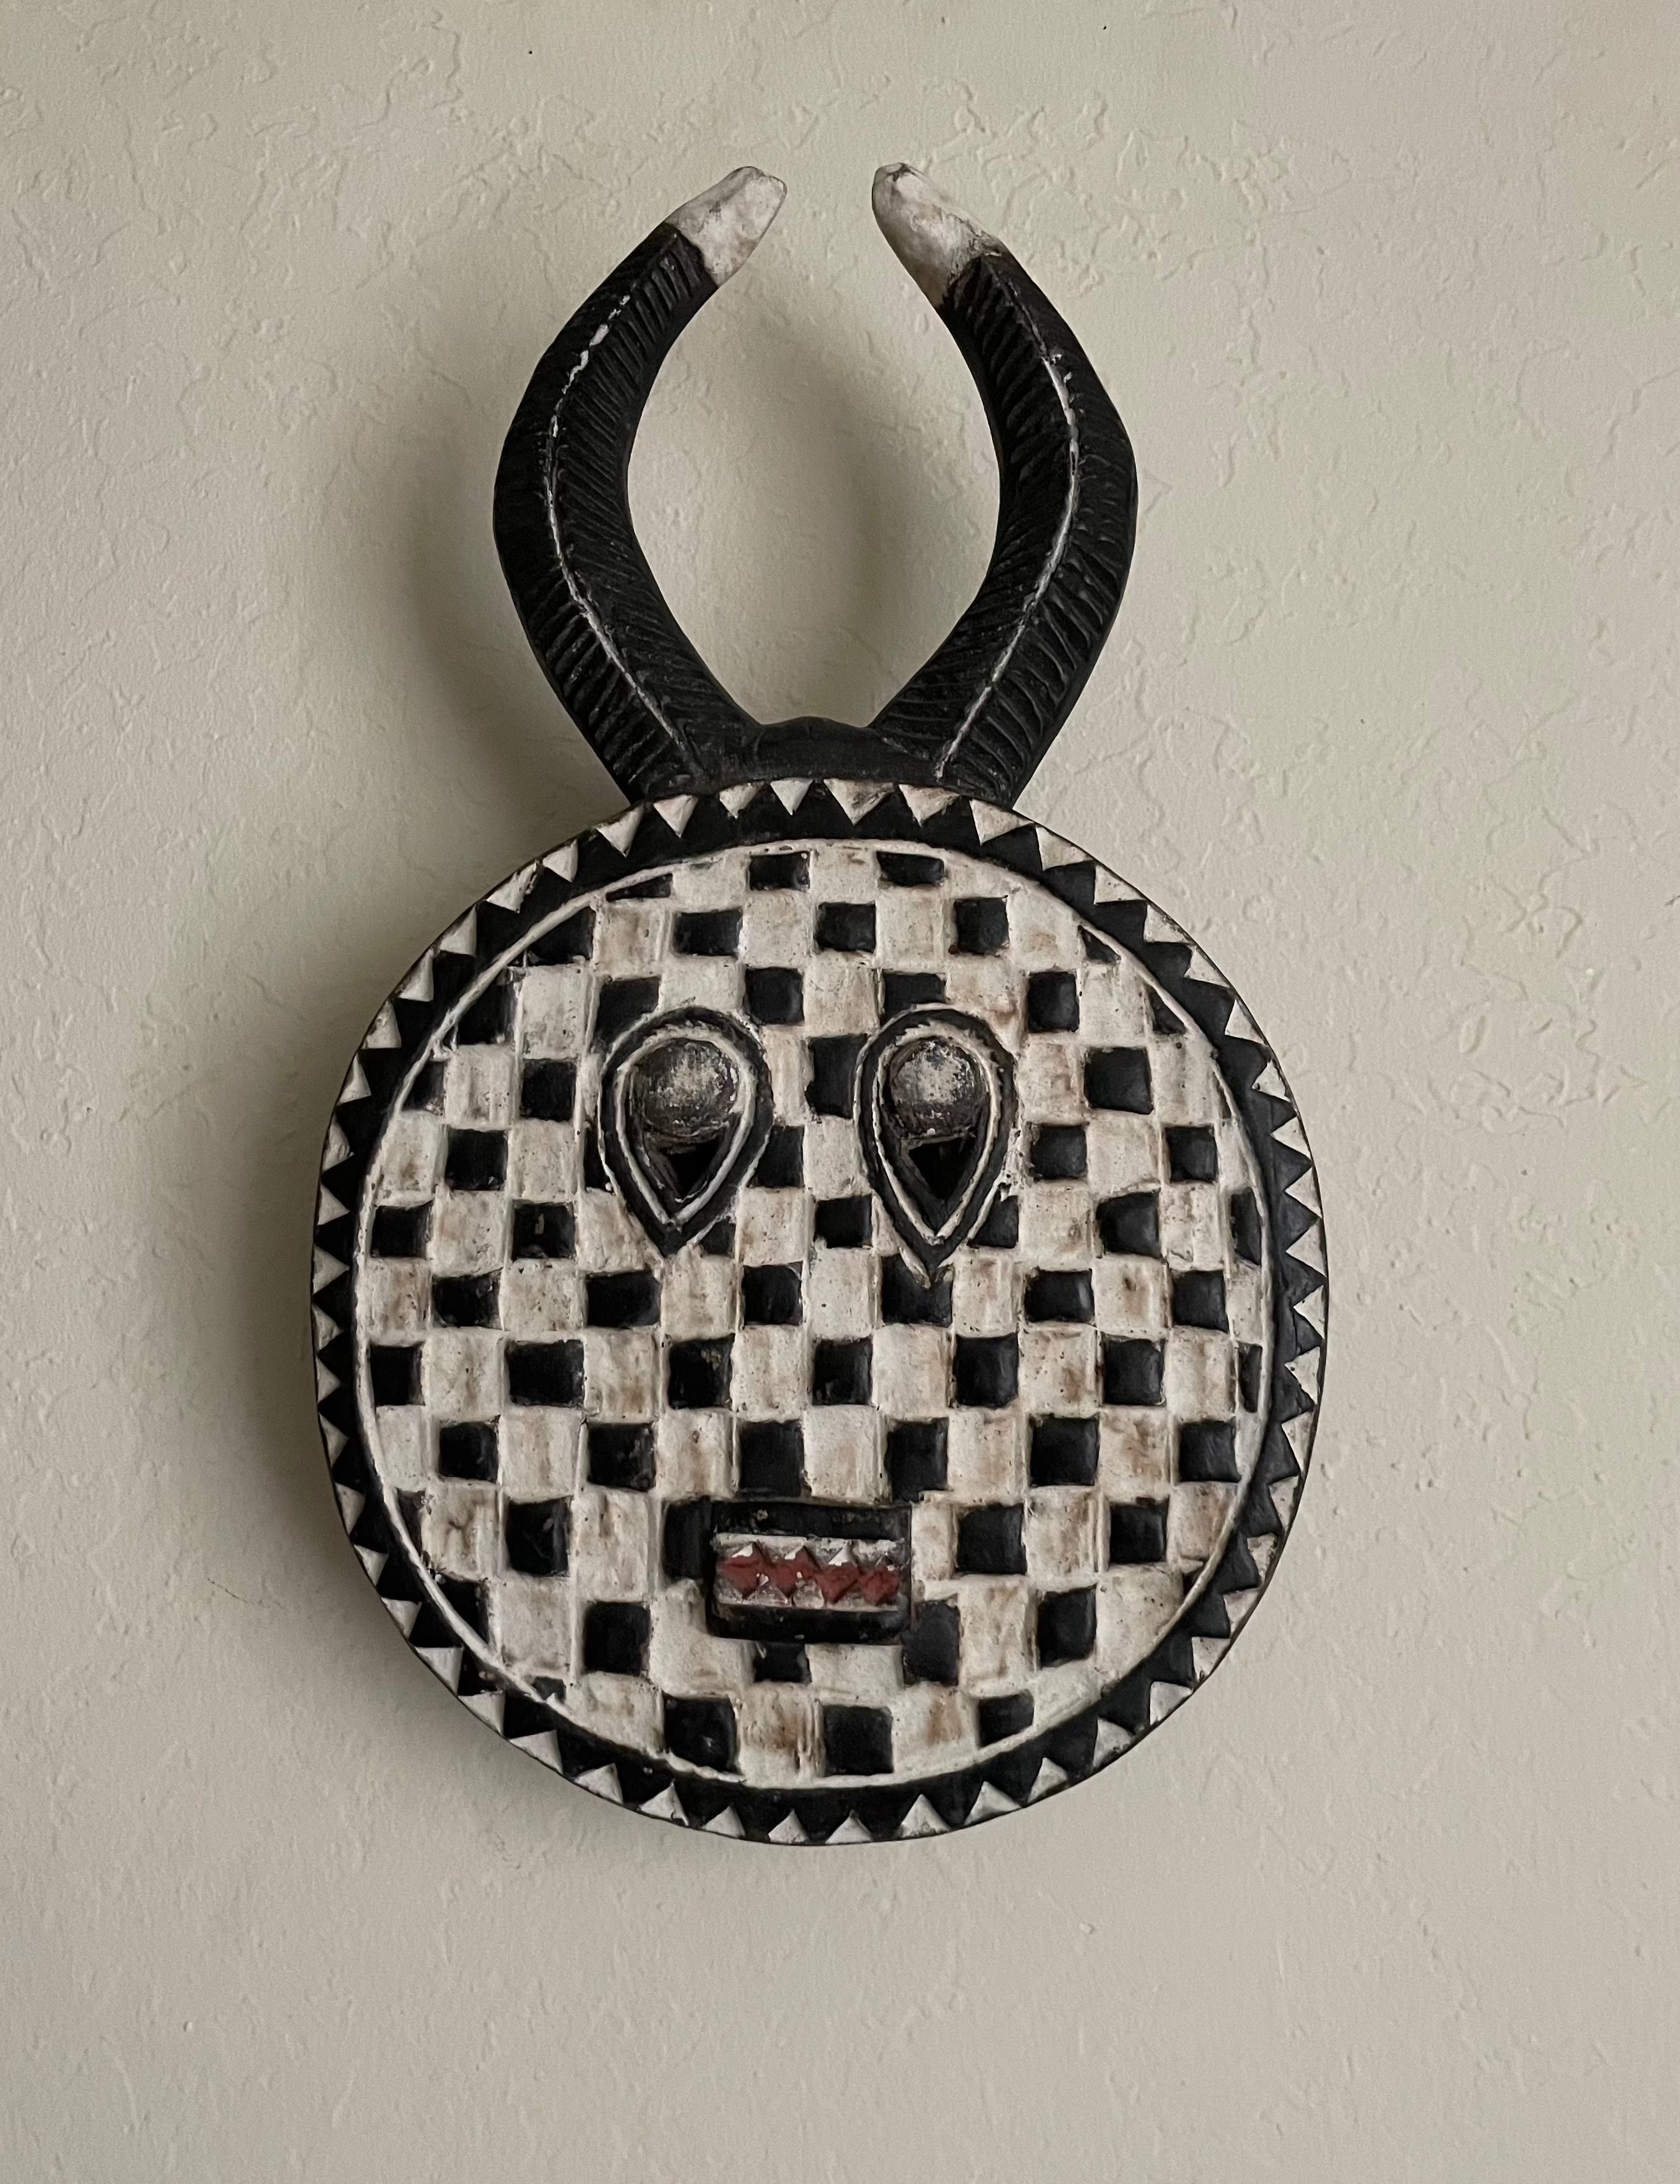 Handcrafted Masks - Handmade - Contemporary -  African Art - Home Decor - Wall -  Artwork - Sculpture -  Wood - Vintage -  Baule Kple Kple - Black White